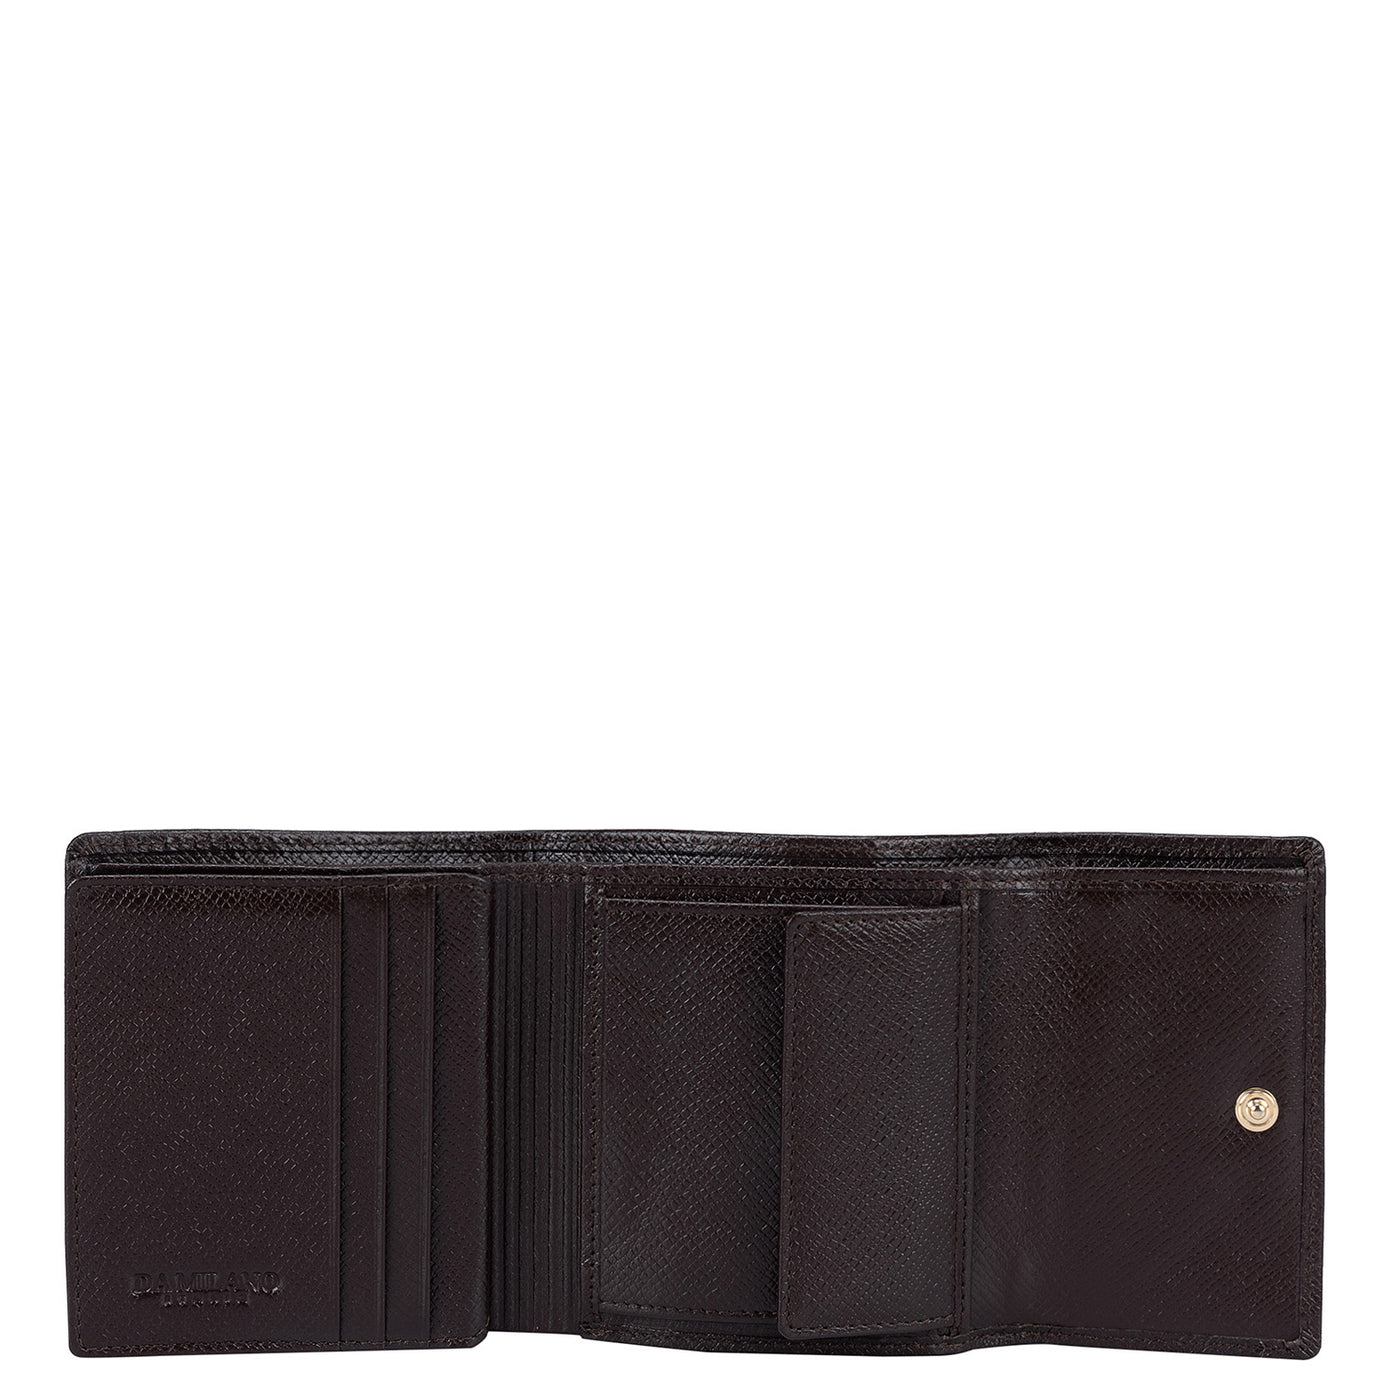 Brown Croco Leather Ladies Wallet & Keychain Gift Set